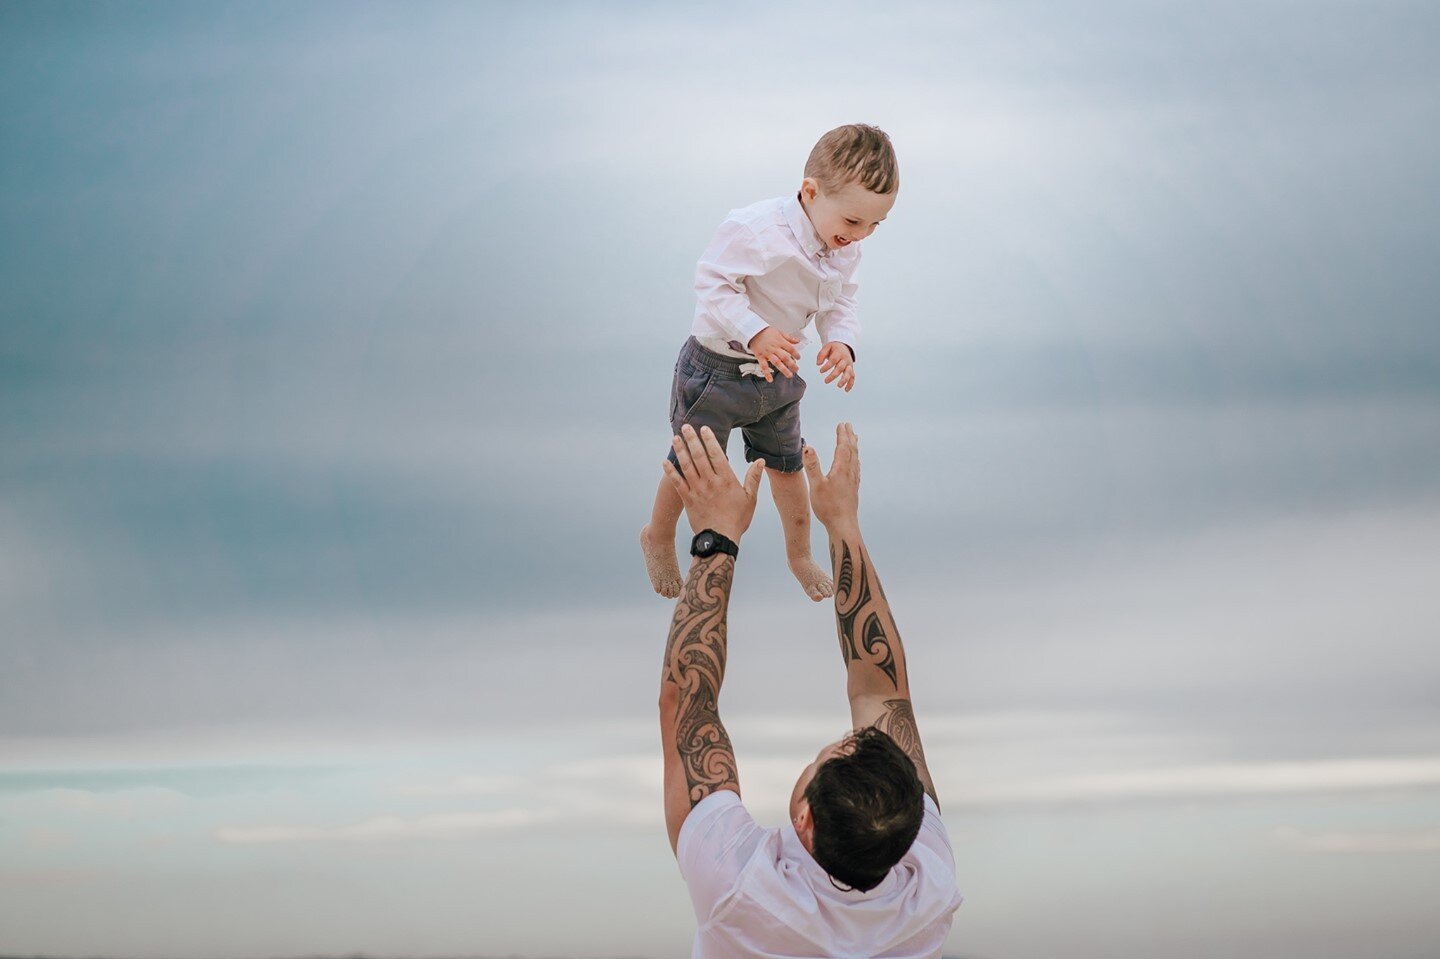 Fly high my son!⁠
⁠
#childphotographer #childportrait #seaford3198 #beachsunset #beachphotoshoot #sunsetportrait #familyphotography #familyphotoshoot #seafordbeach #familyphotographer #josouthwellphotography #seafordphotographer #beachphotography #fa